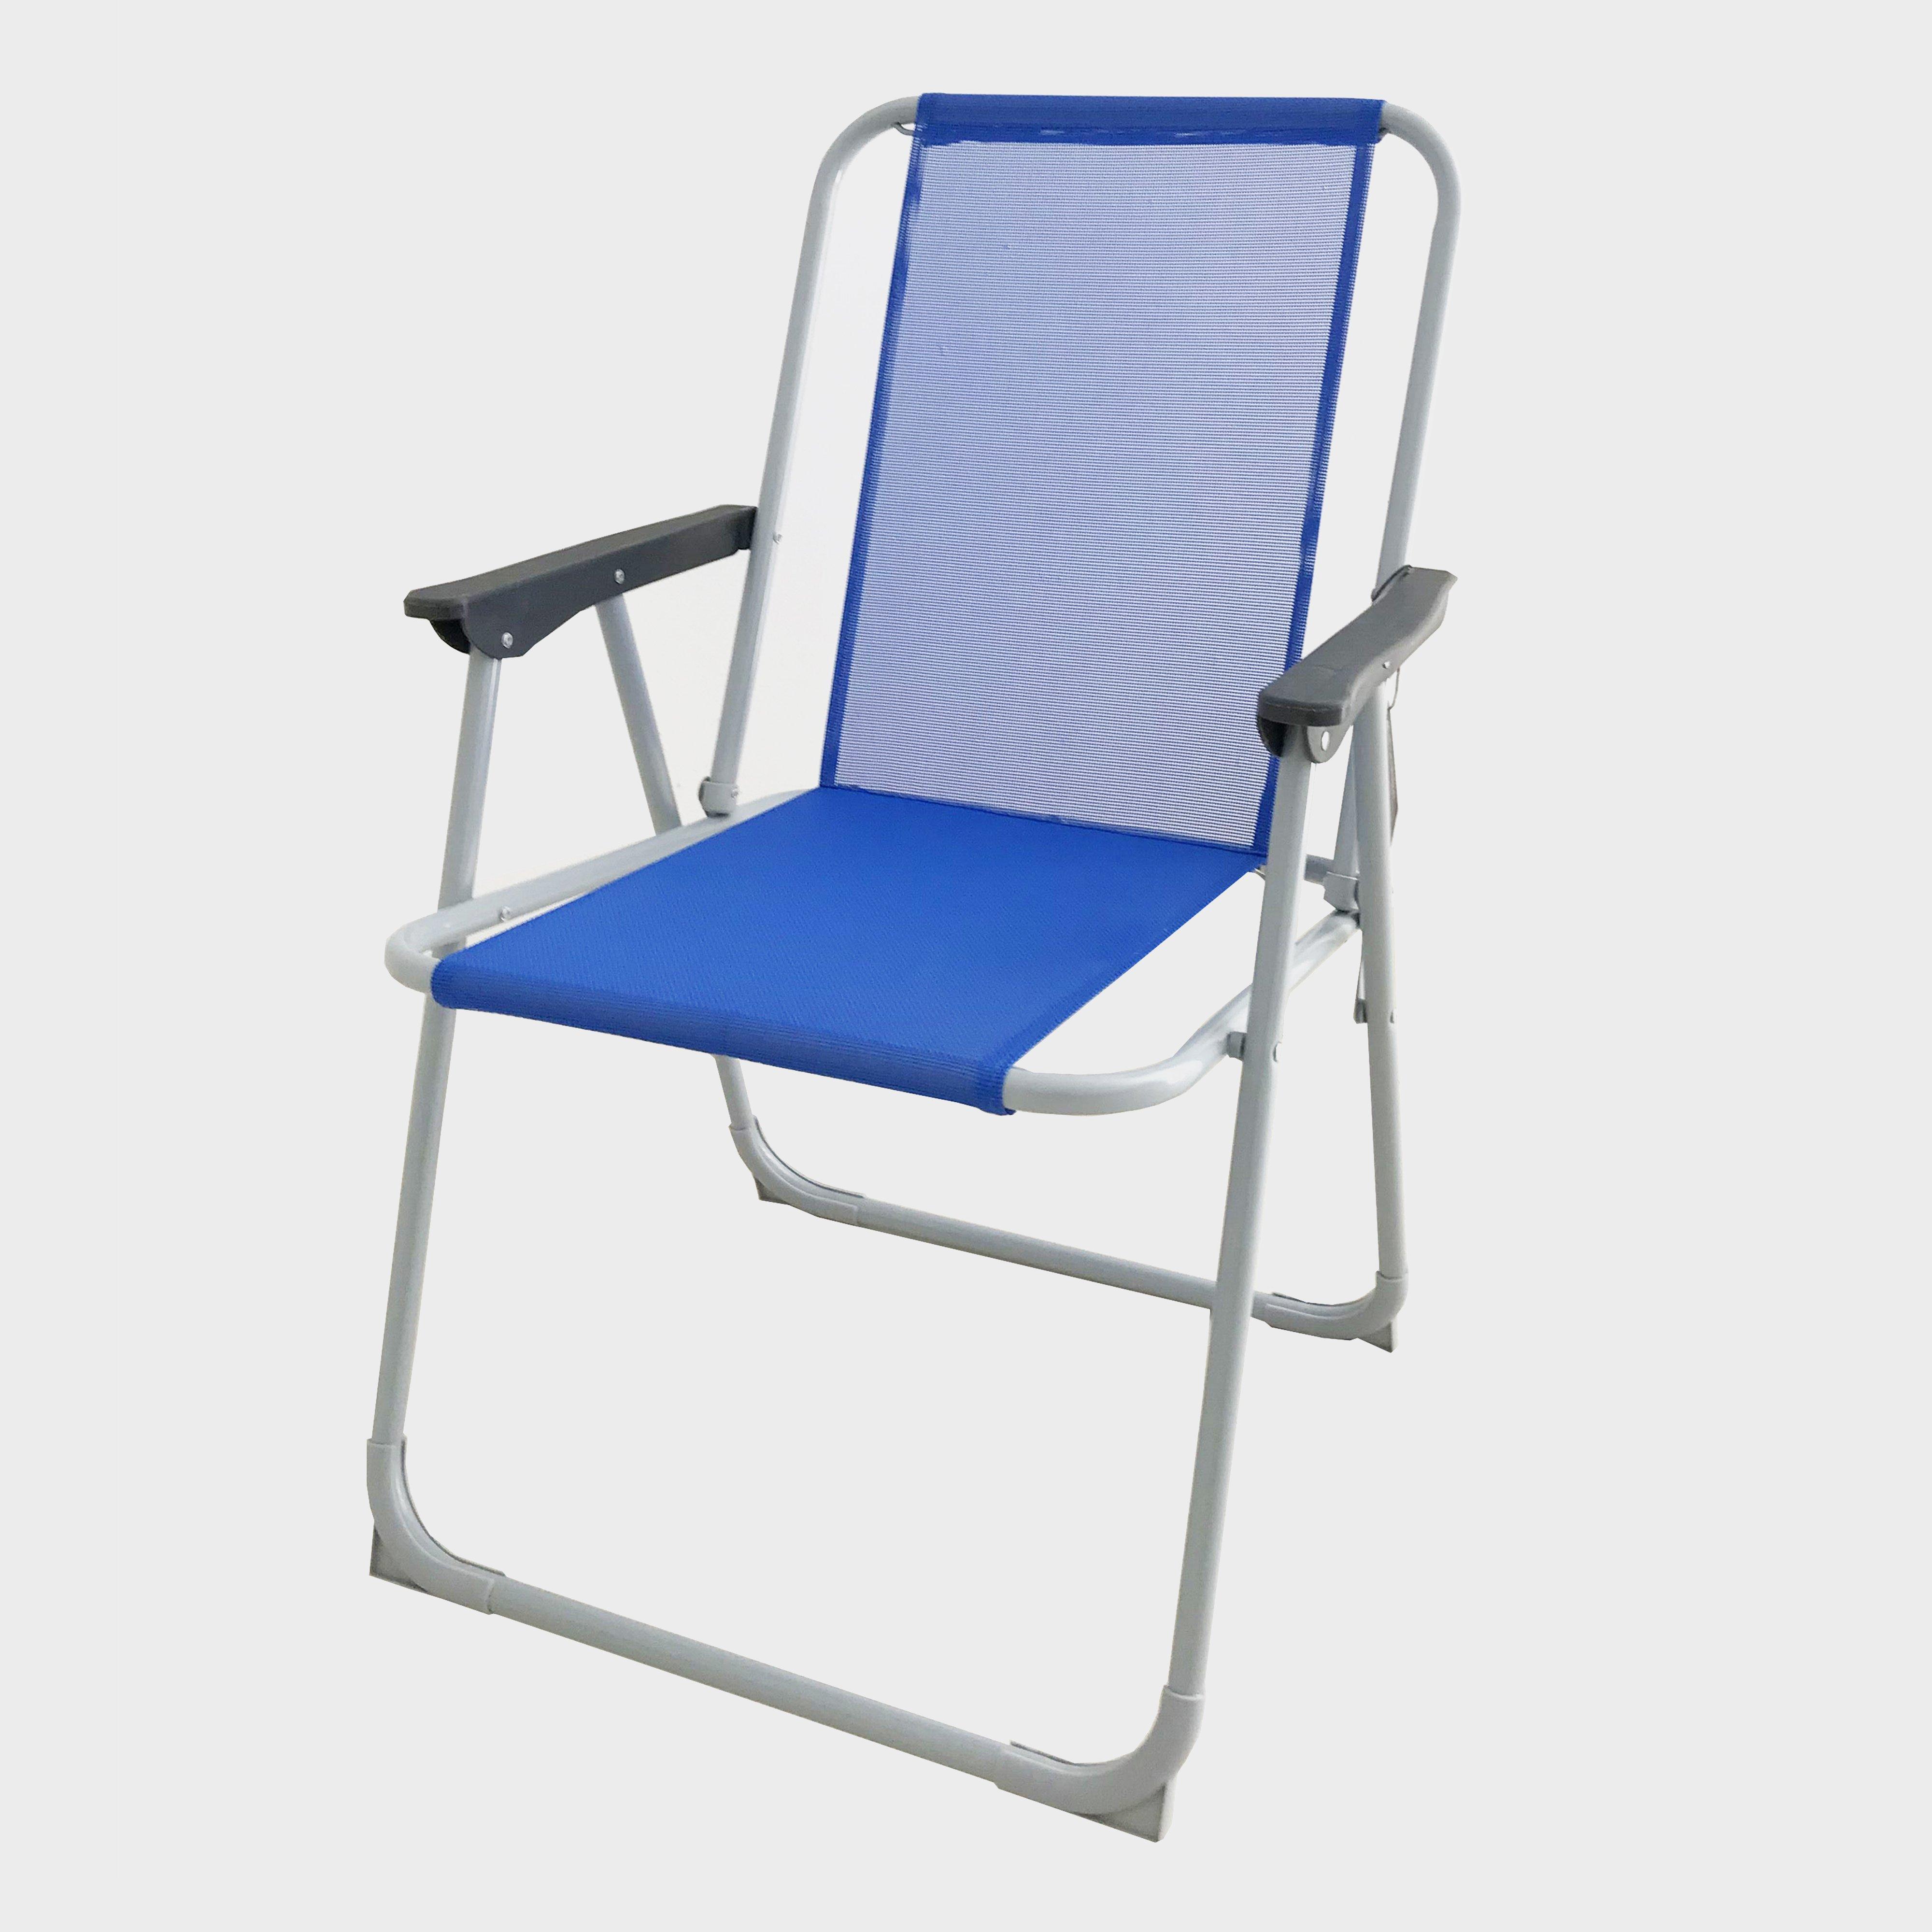 vango chairs go outdoors